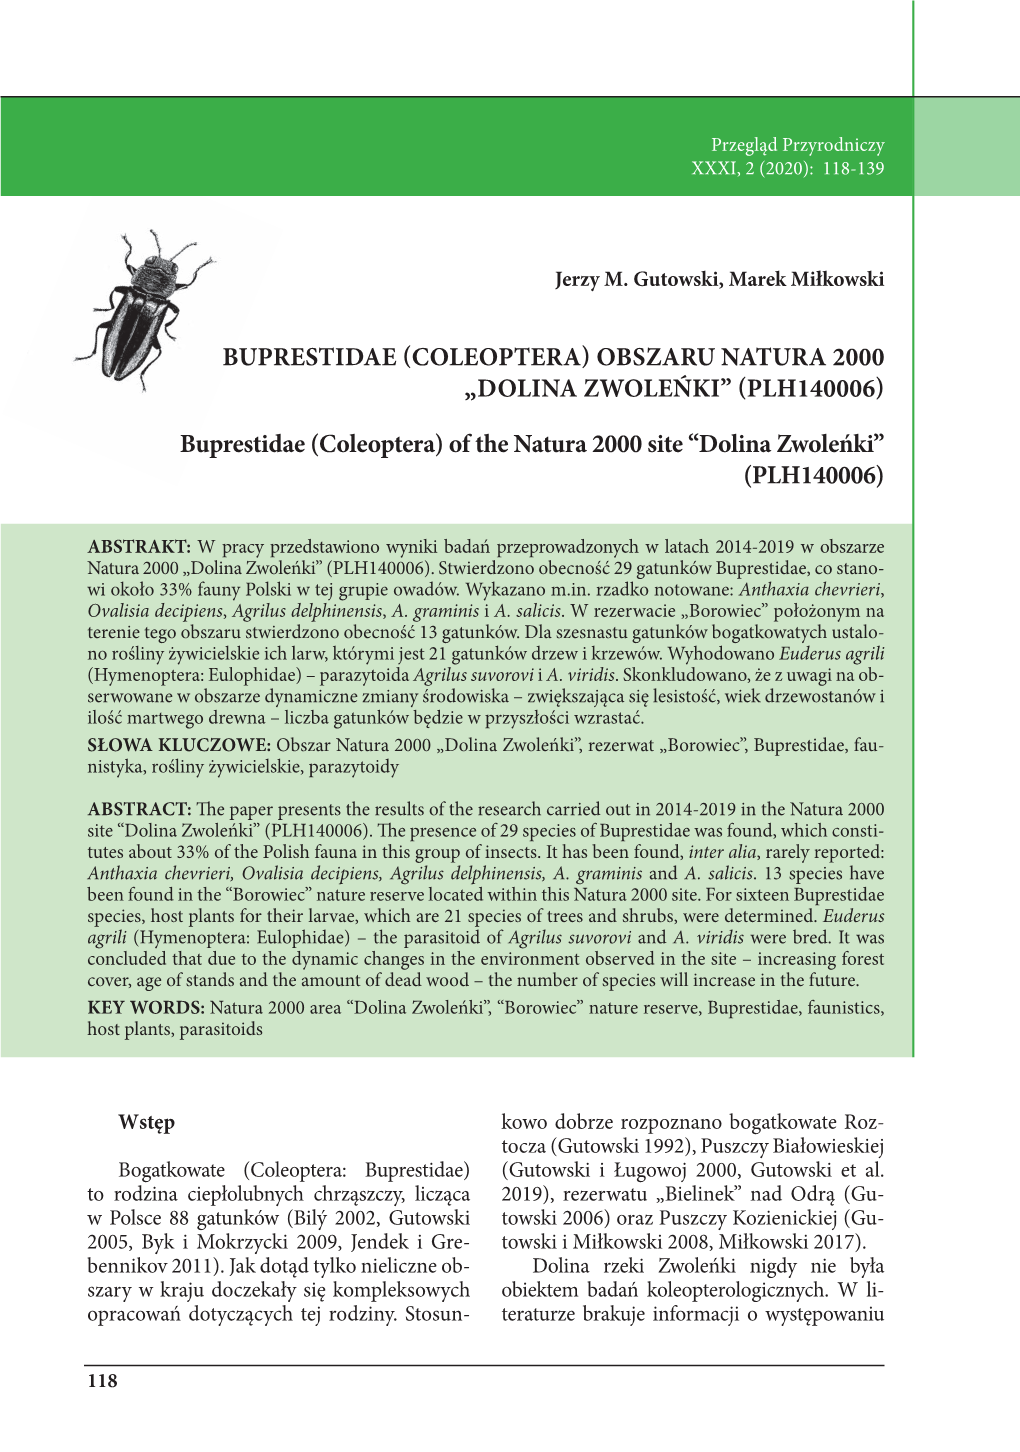 Buprestidae (Coleoptera) Obszaru Natura 2000 „Dolina Zwoleńki” (Plh140006)